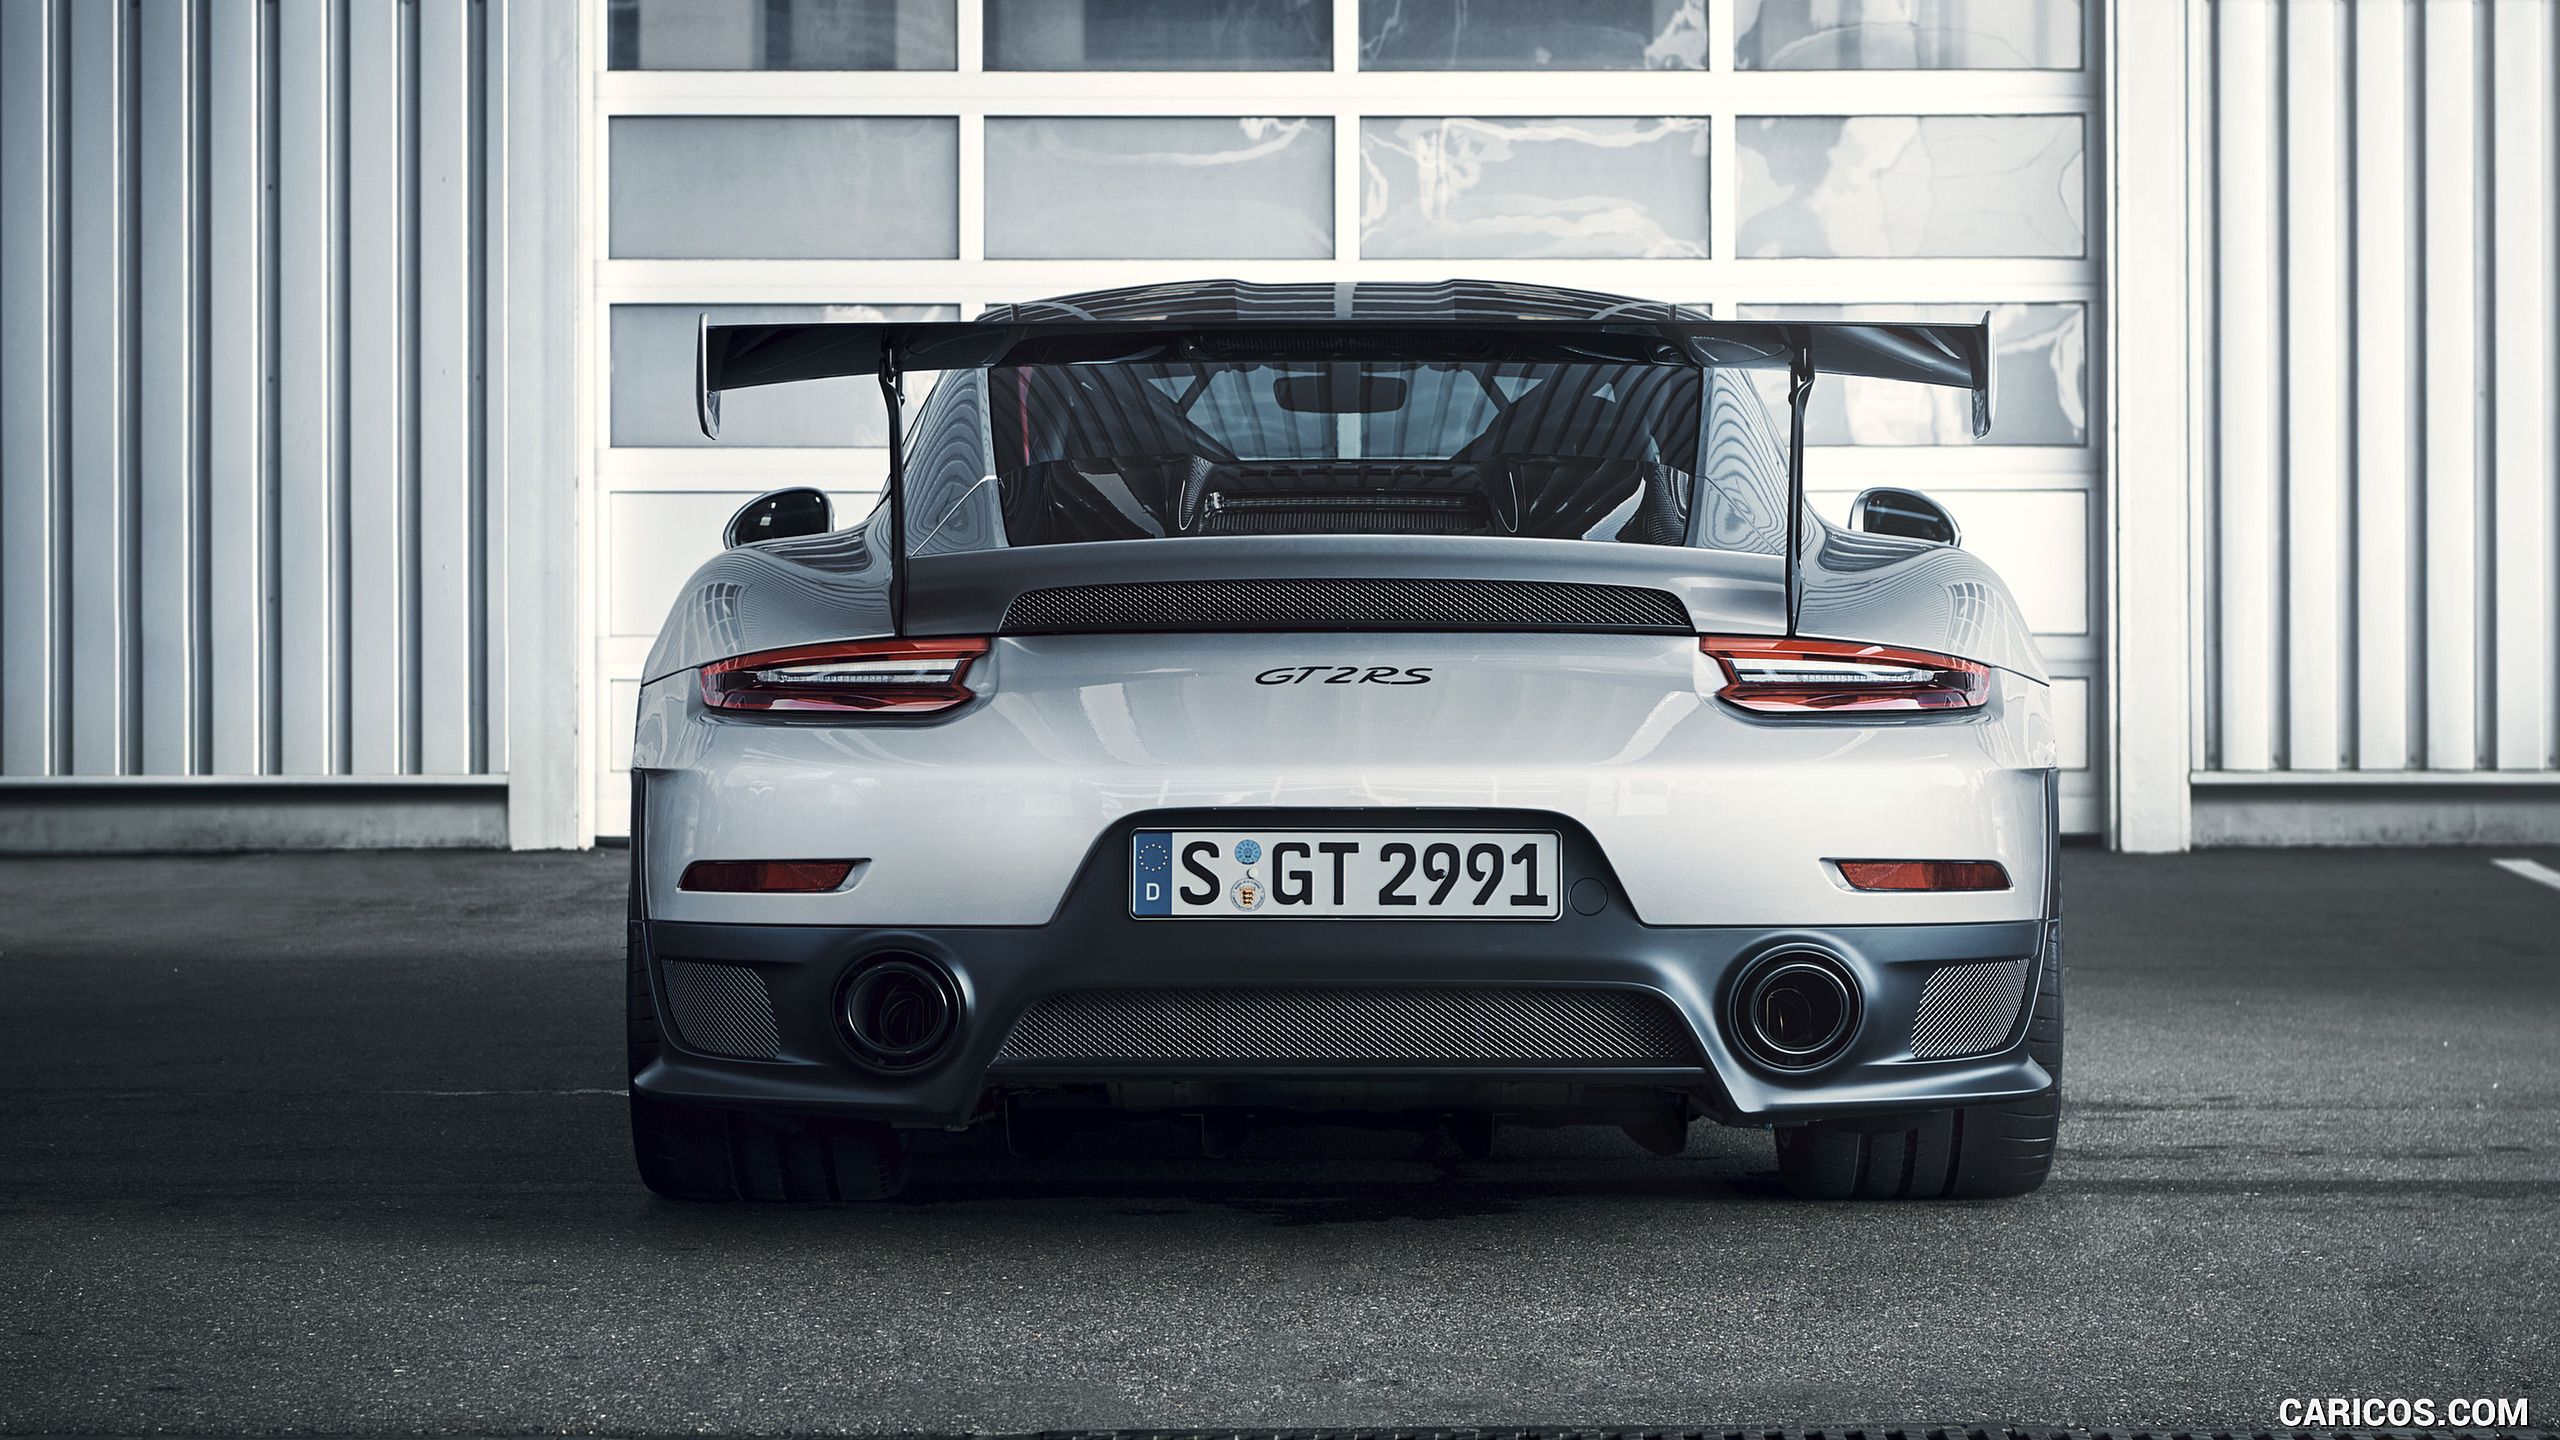 Free download 2018 Porsche 911 GT2 RS Rear HD Wallpaper 6